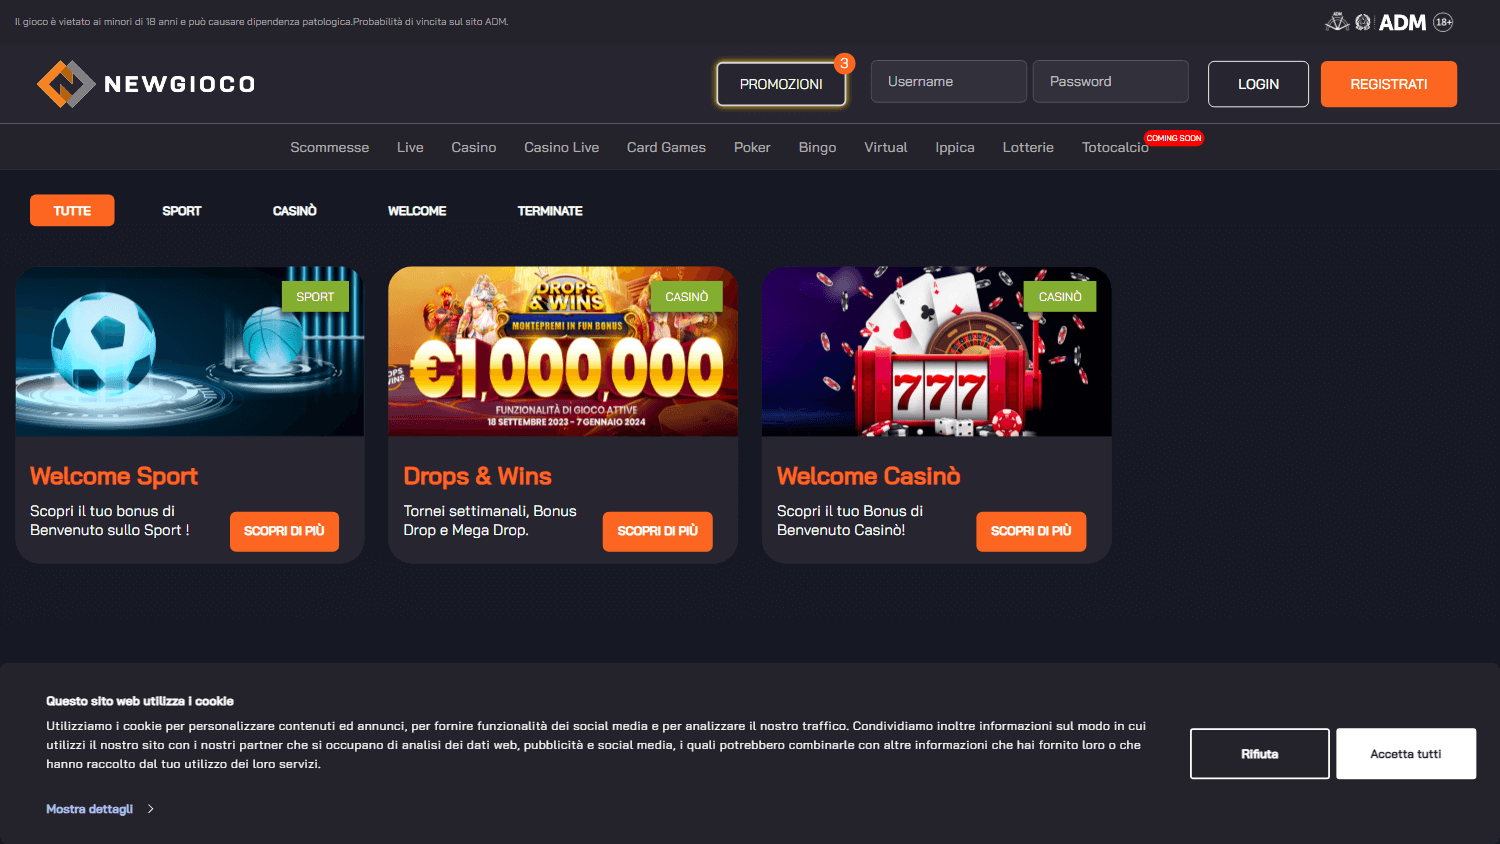 newgioco_casino_promotions_desktop